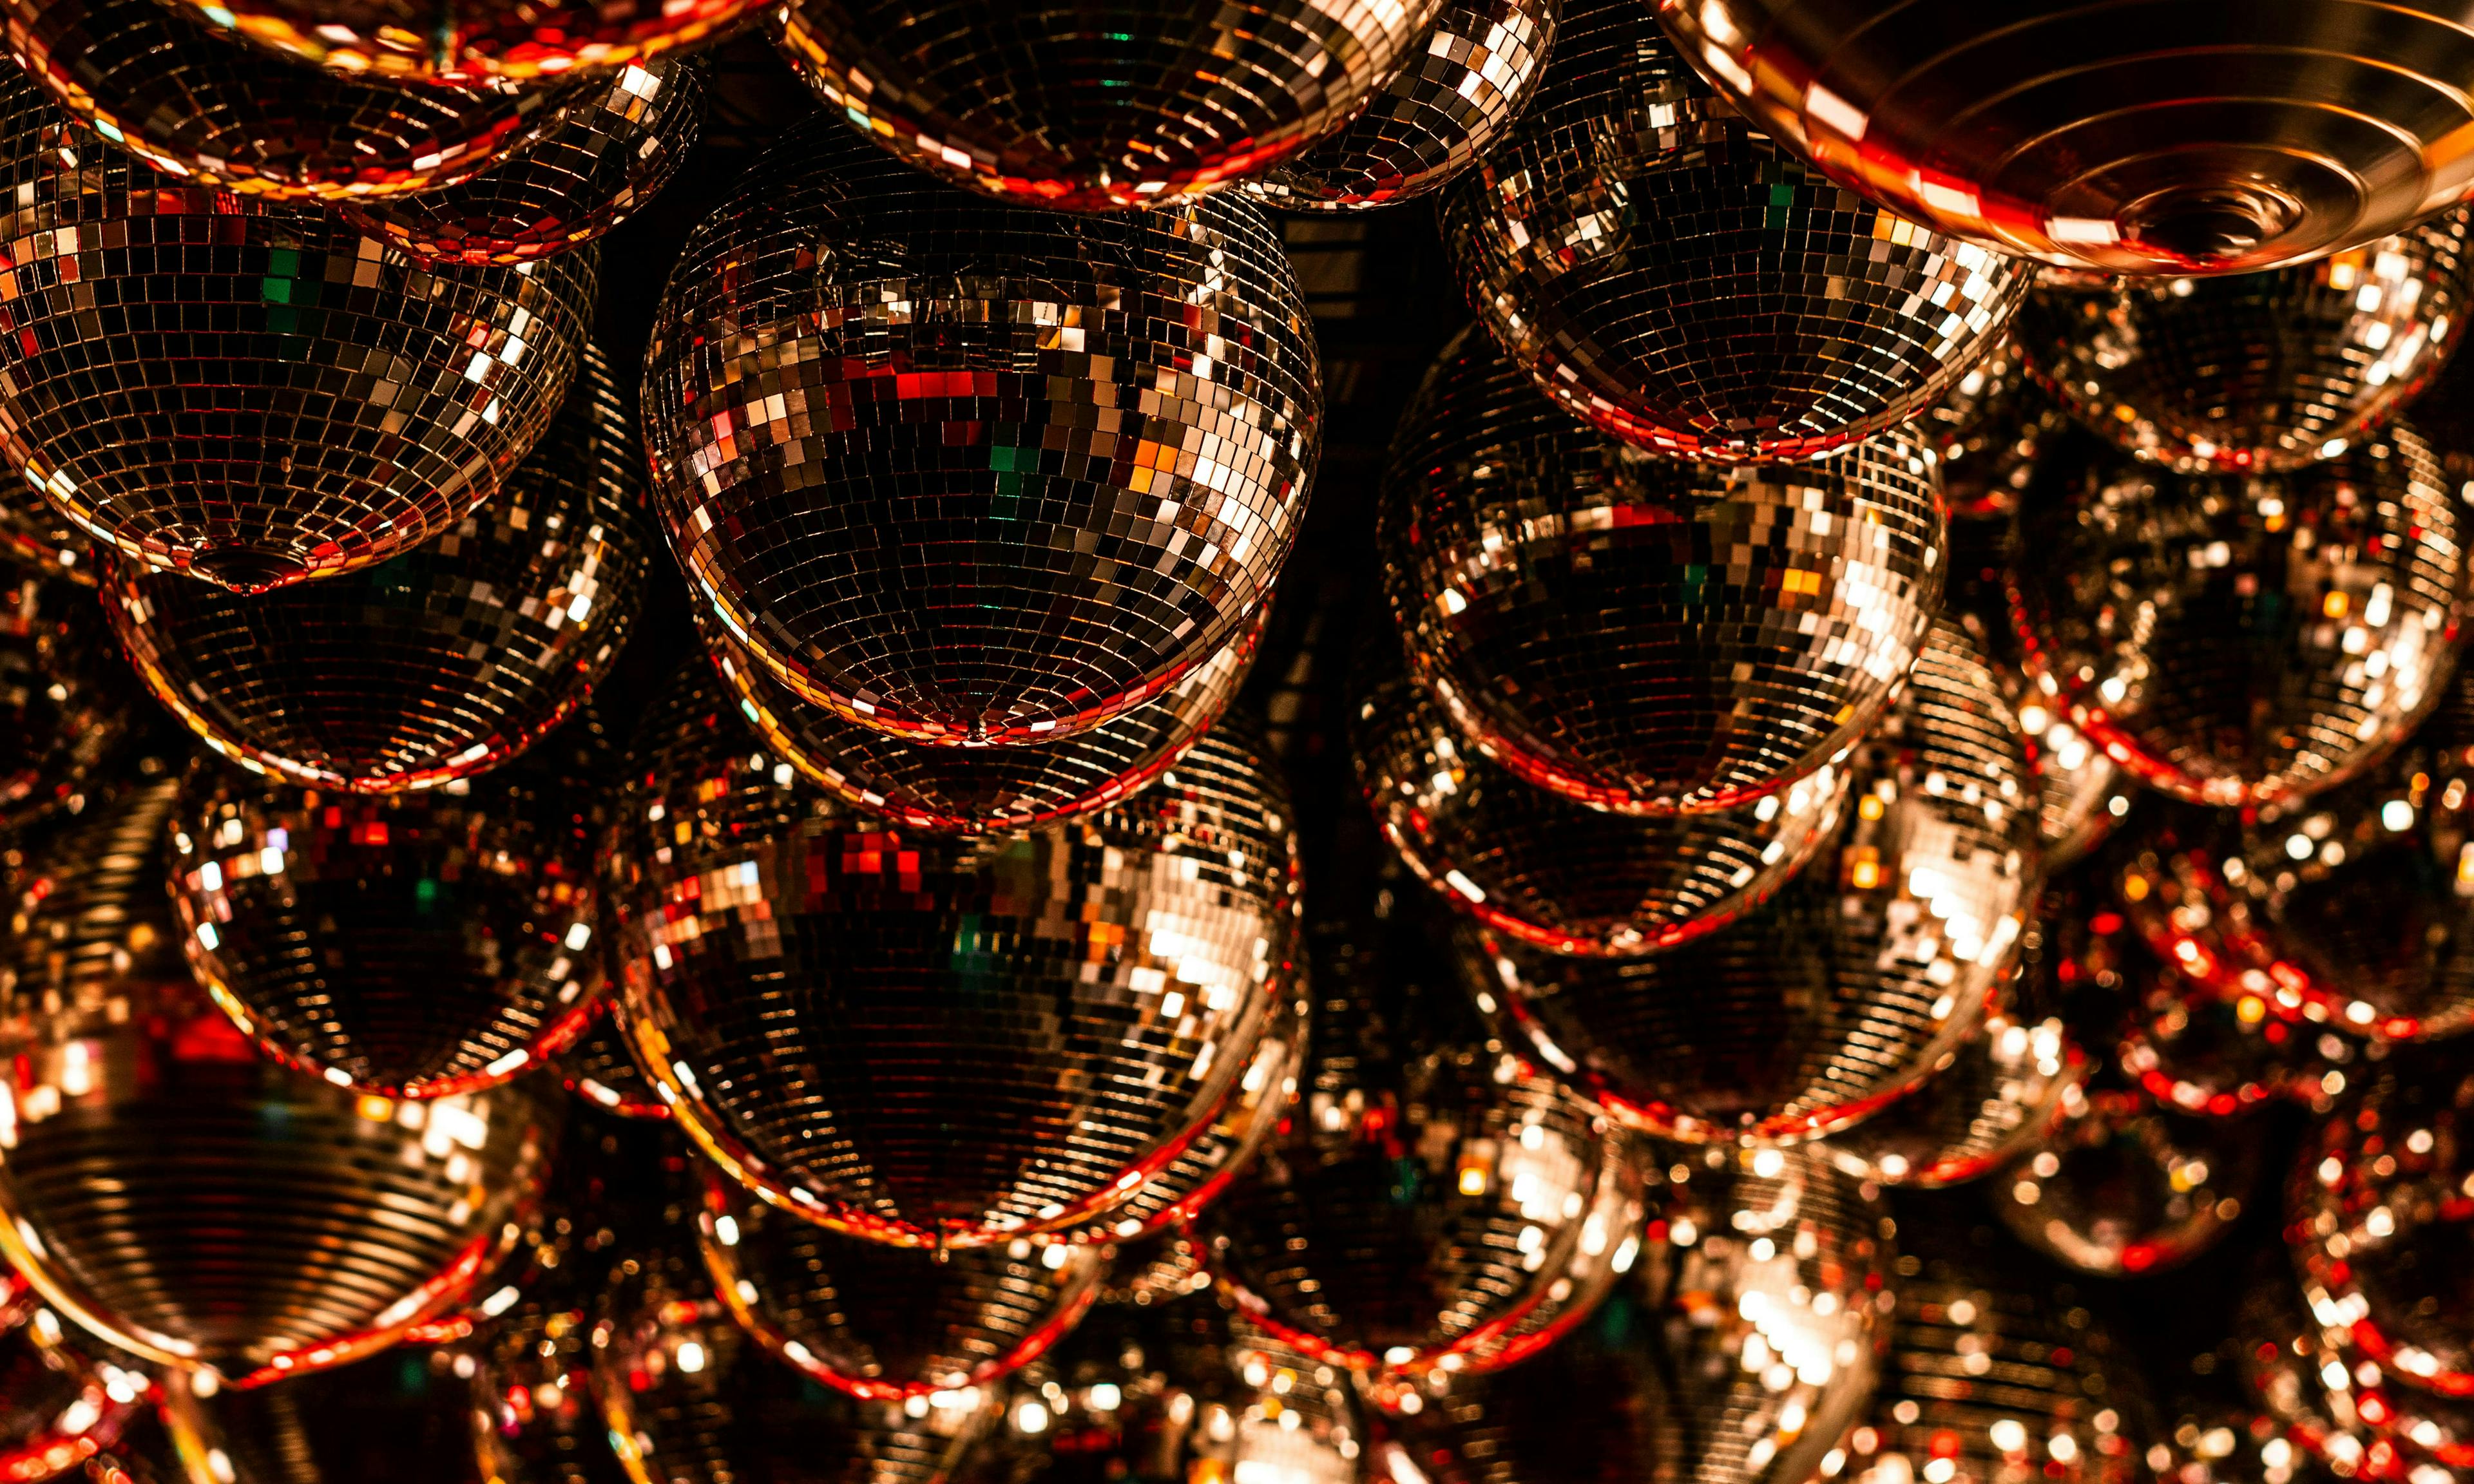 sphere chandelier lamp lighting